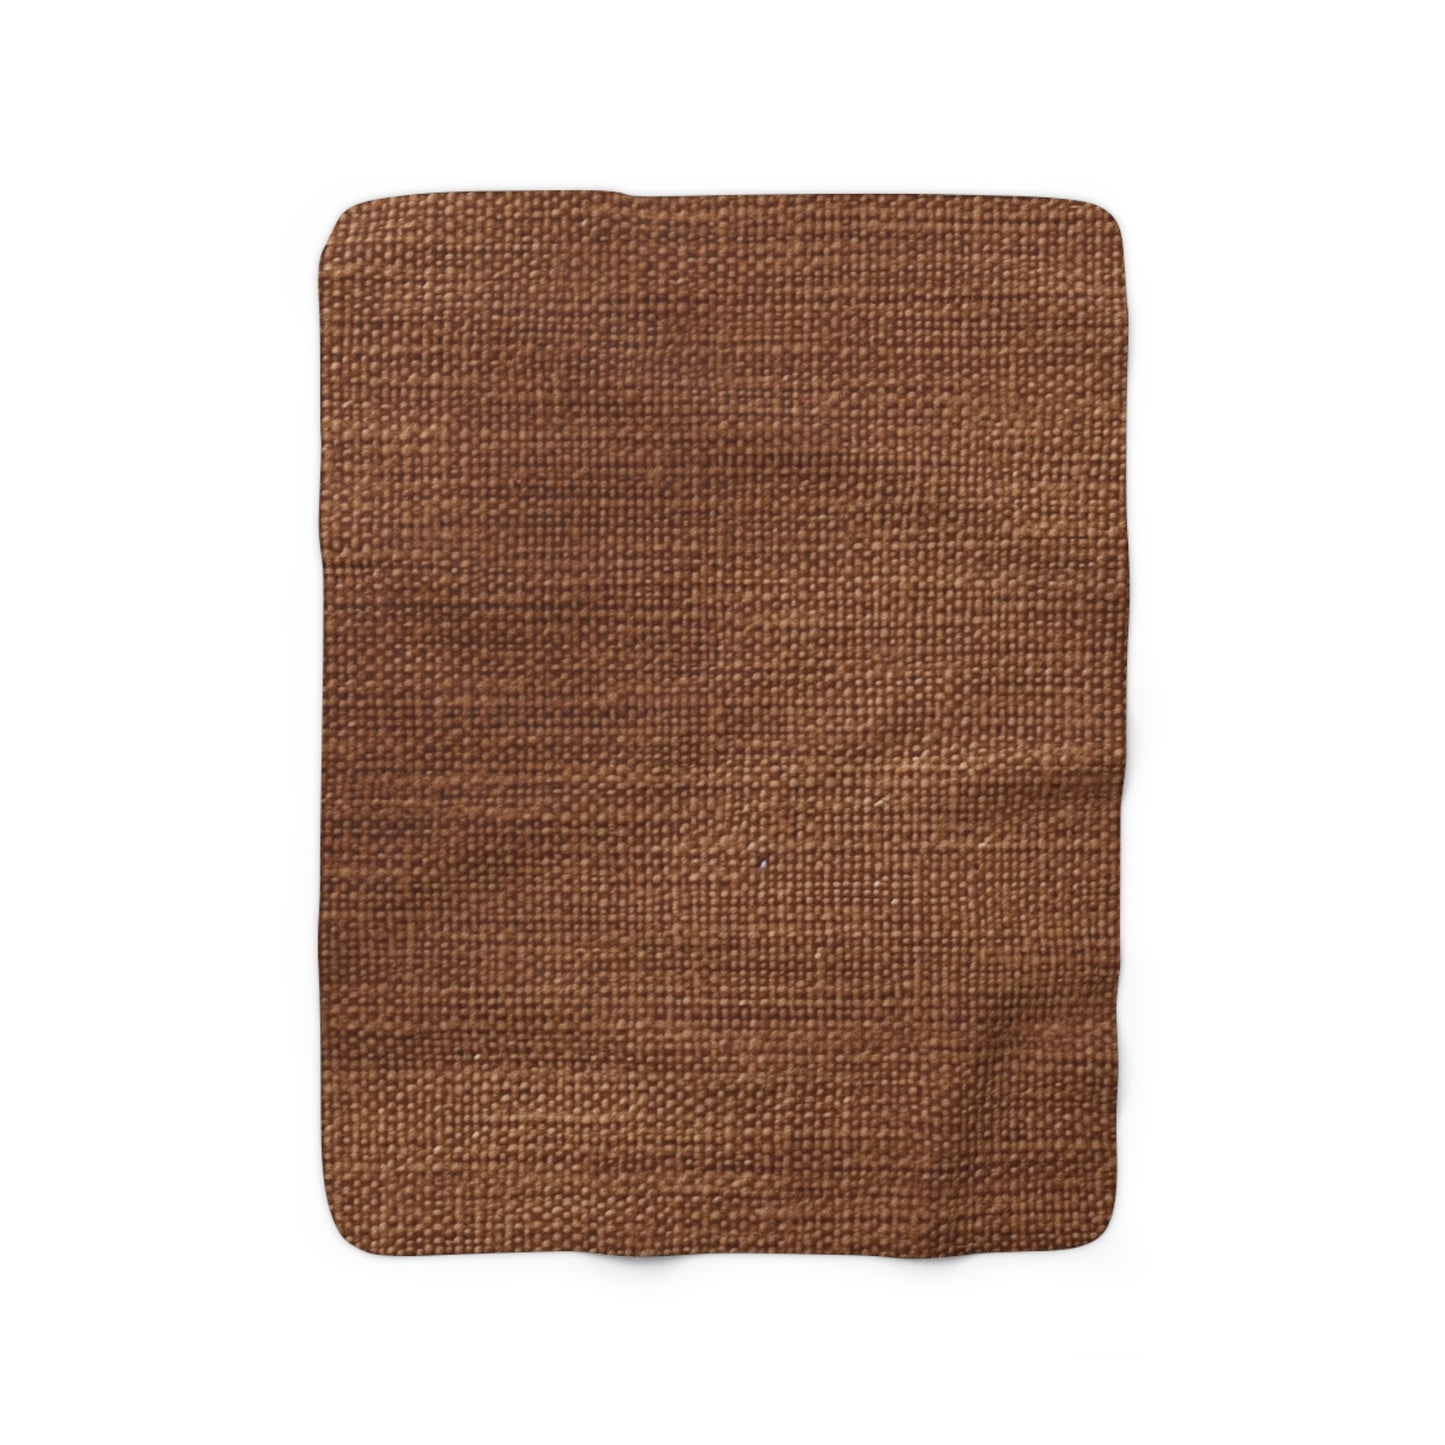 Luxe Dark Brown: Denim-Inspired, Distinctively Textured Fabric - Sherpa Fleece Blanket